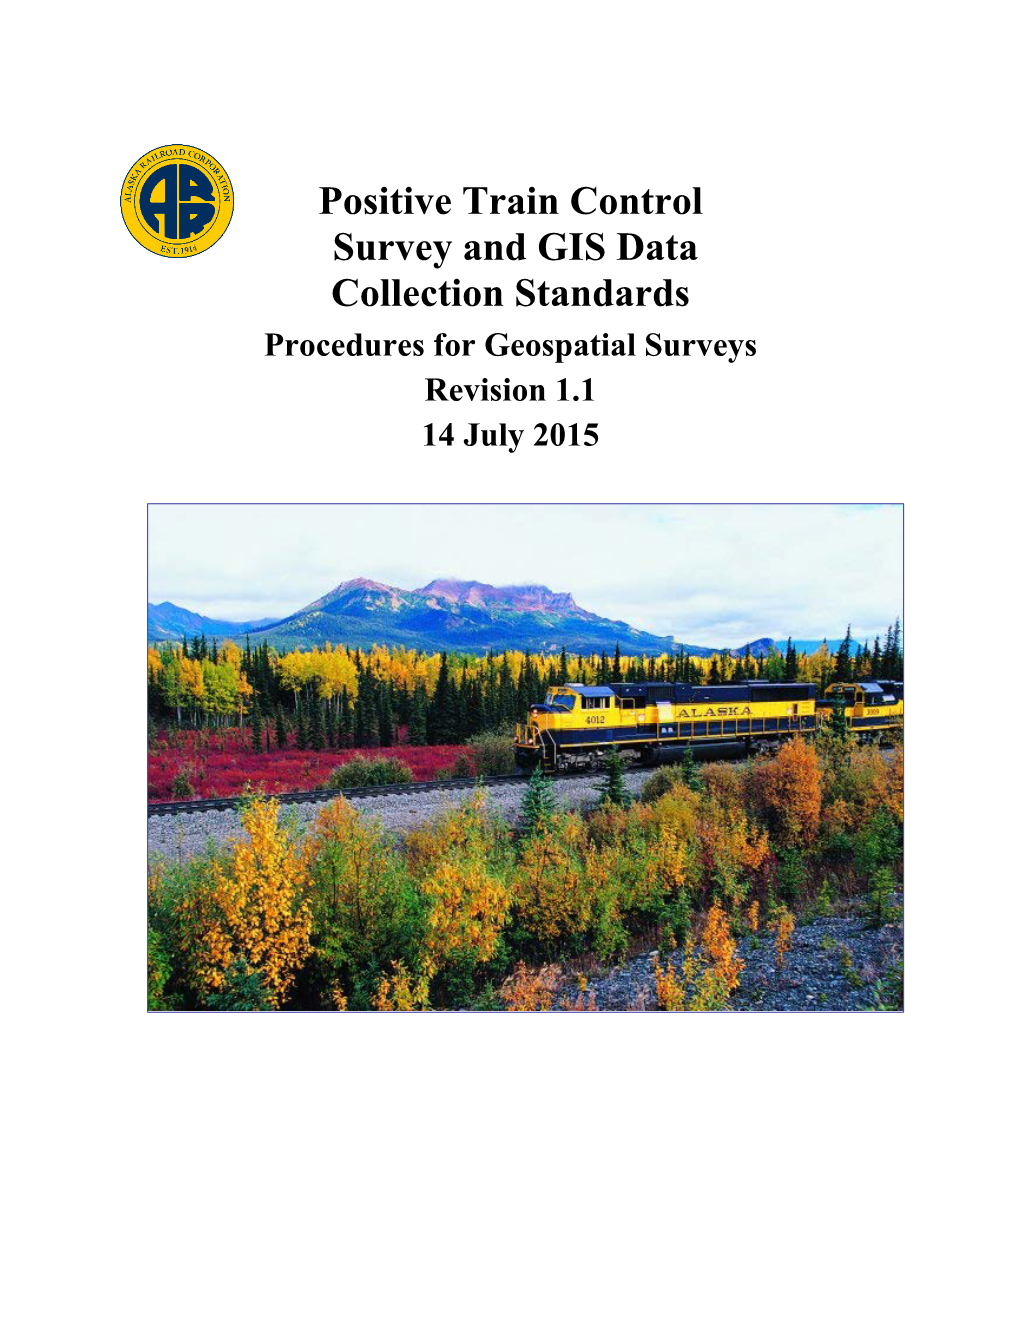 Alaska Railroad Collision Avoidance Operations and Maintenance Manual